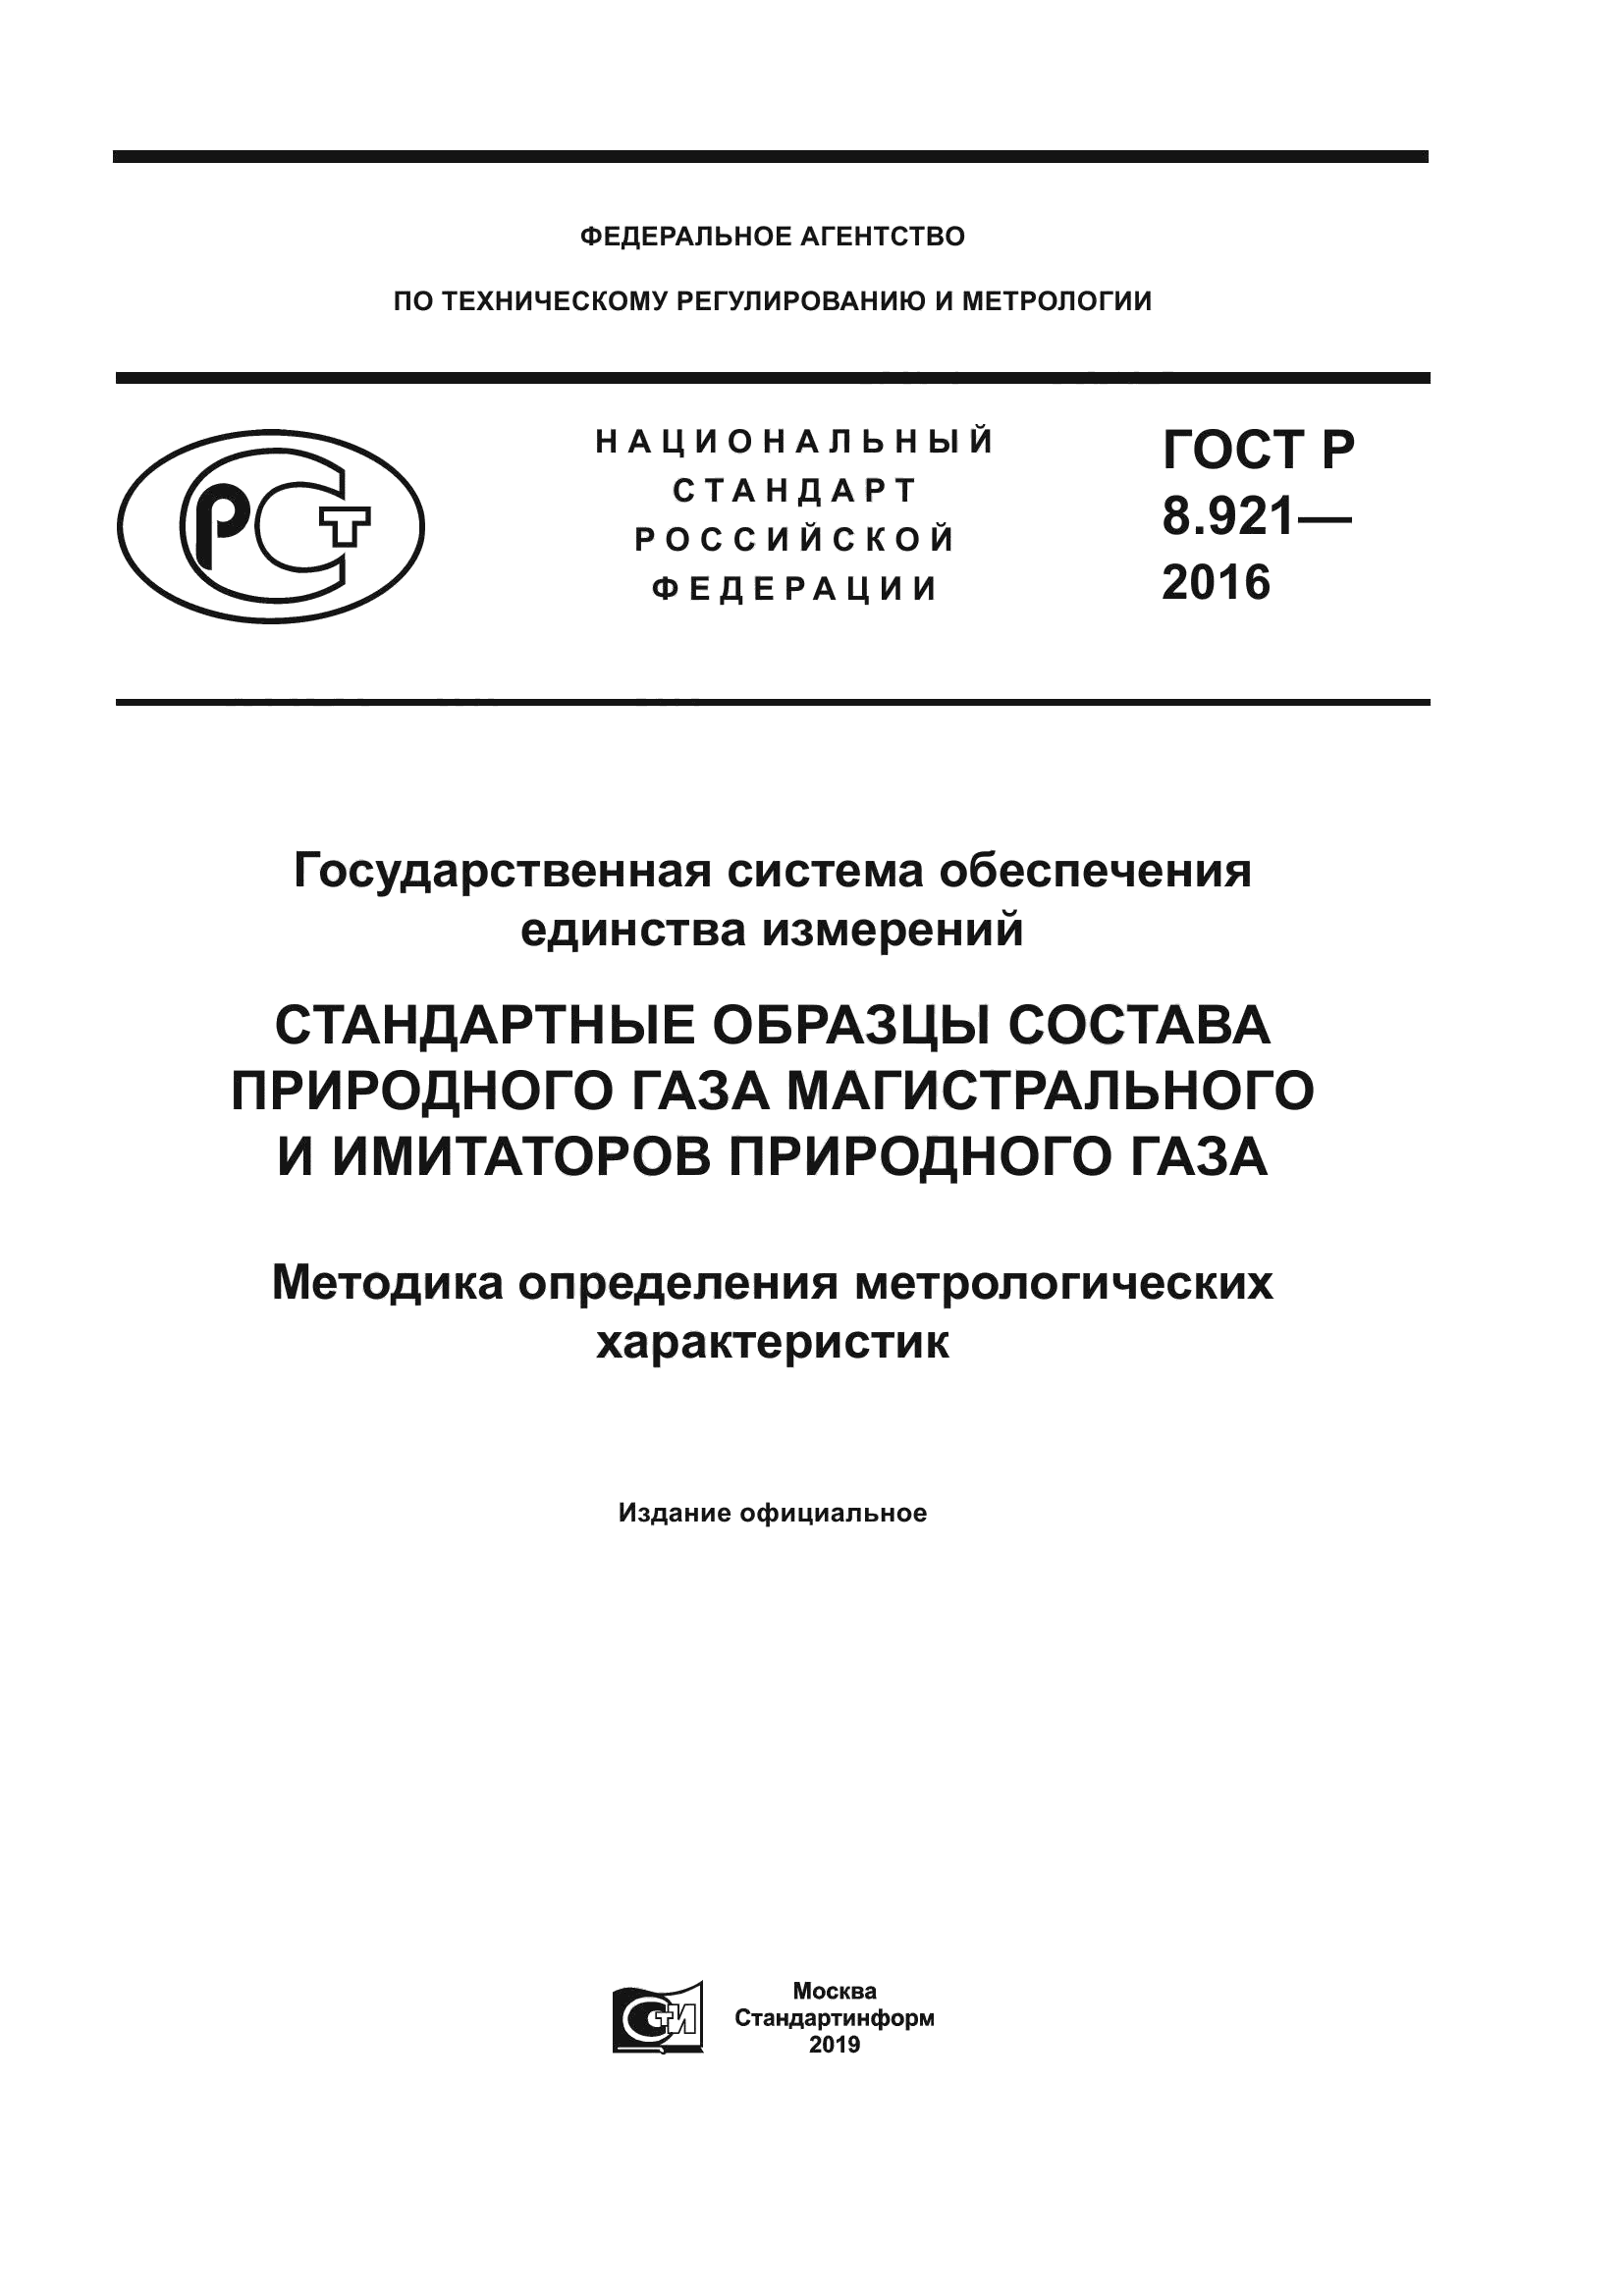 ГОСТ Р 8.921-2016